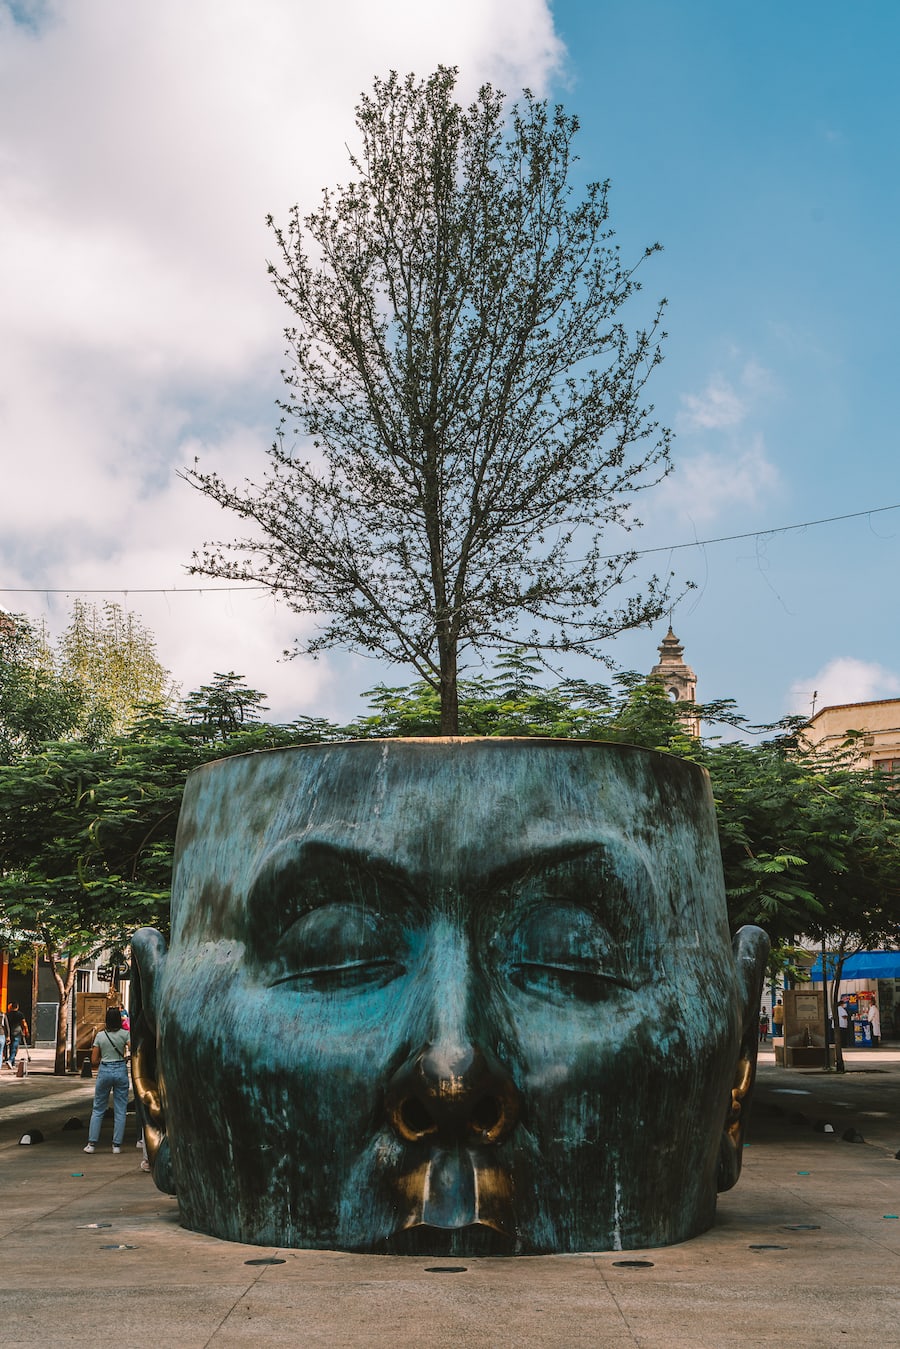 Sculpture in the historic center of Guadalajara